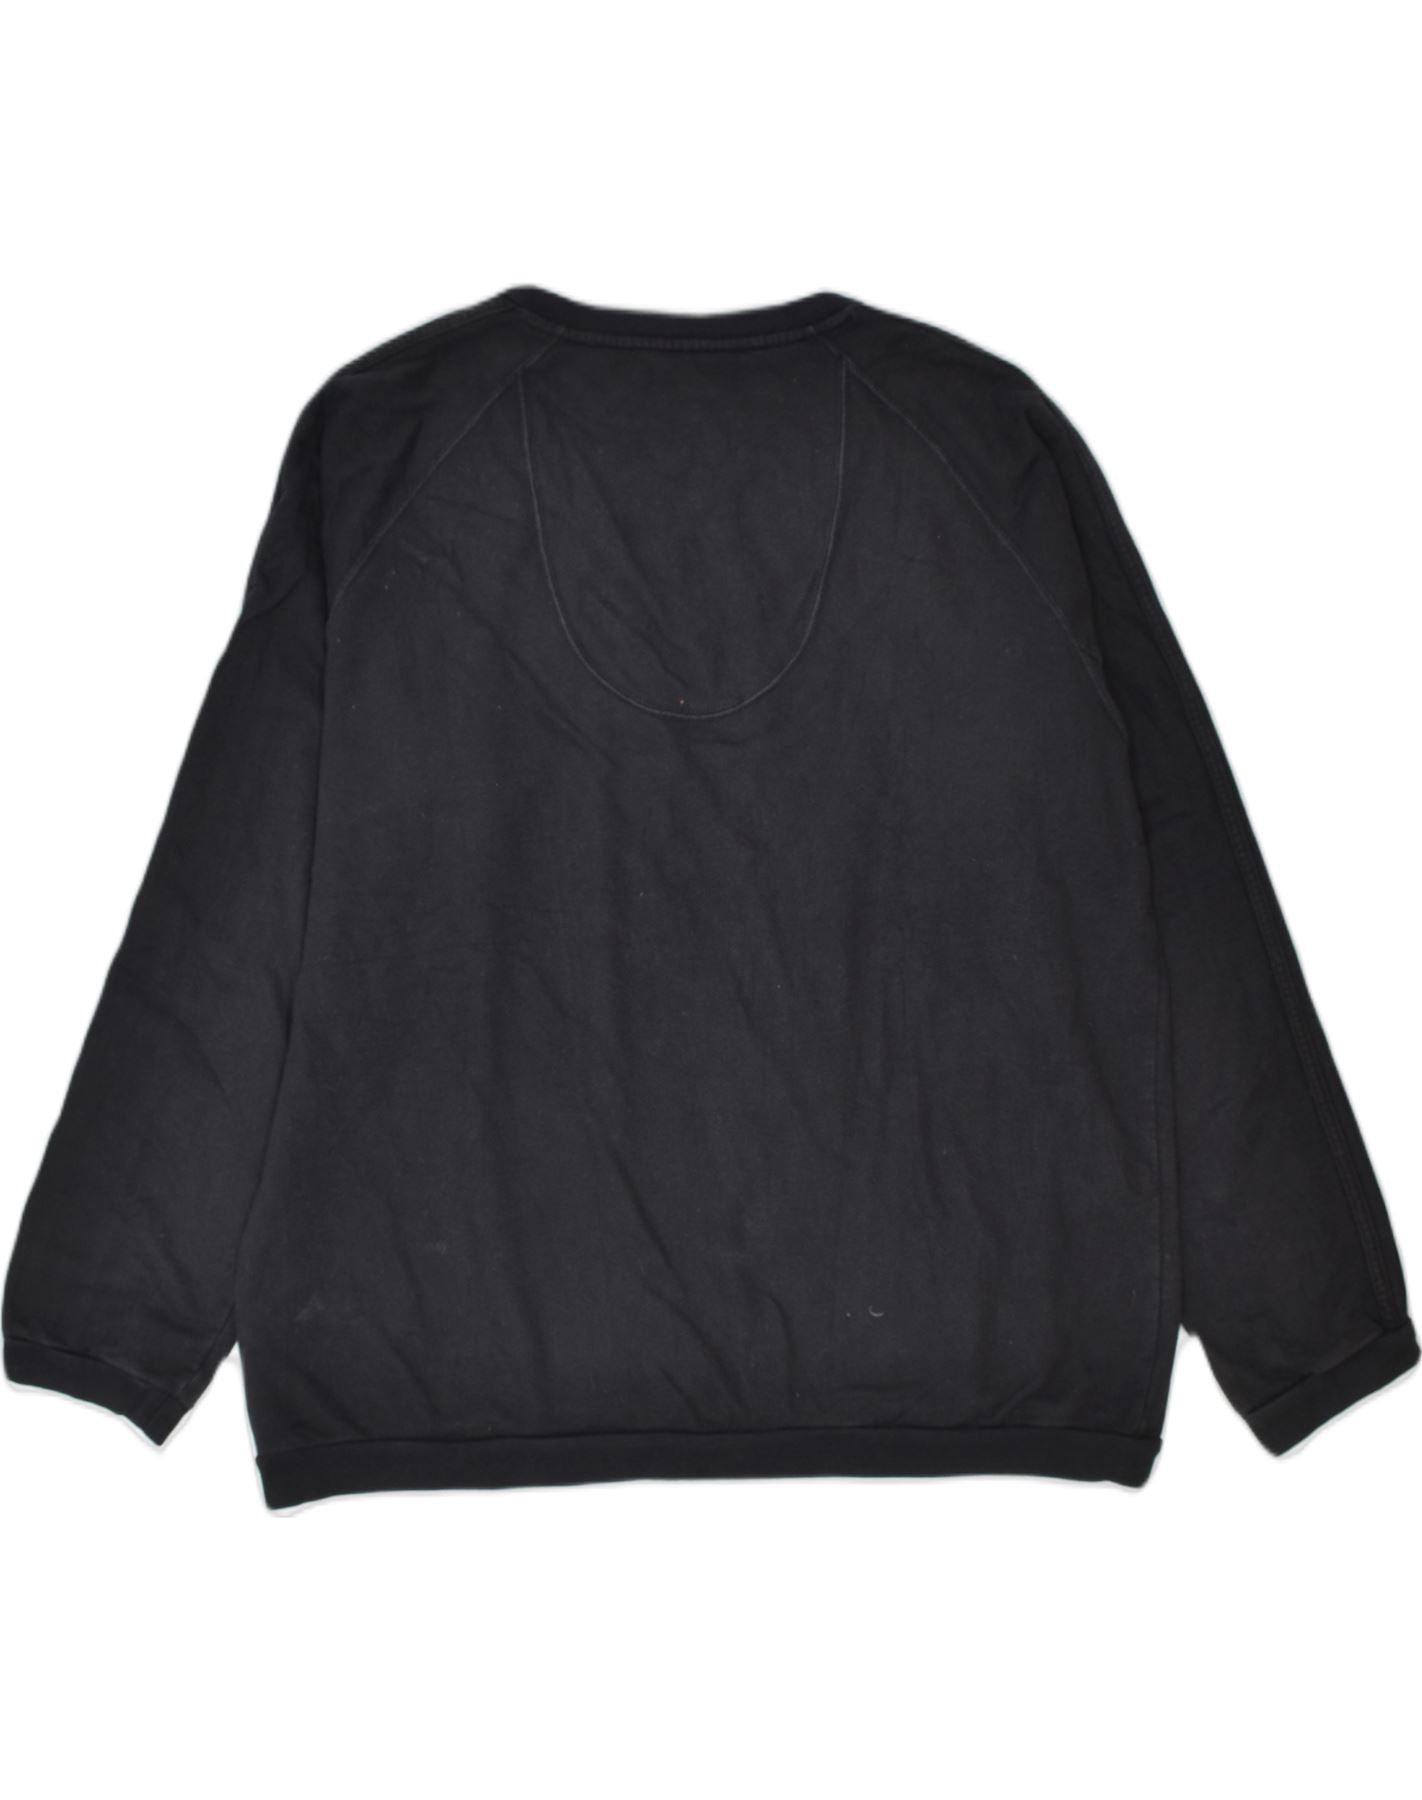 ADIDAS Mens Sweatshirt Jumper XL Black Cotton | Vintage & Second